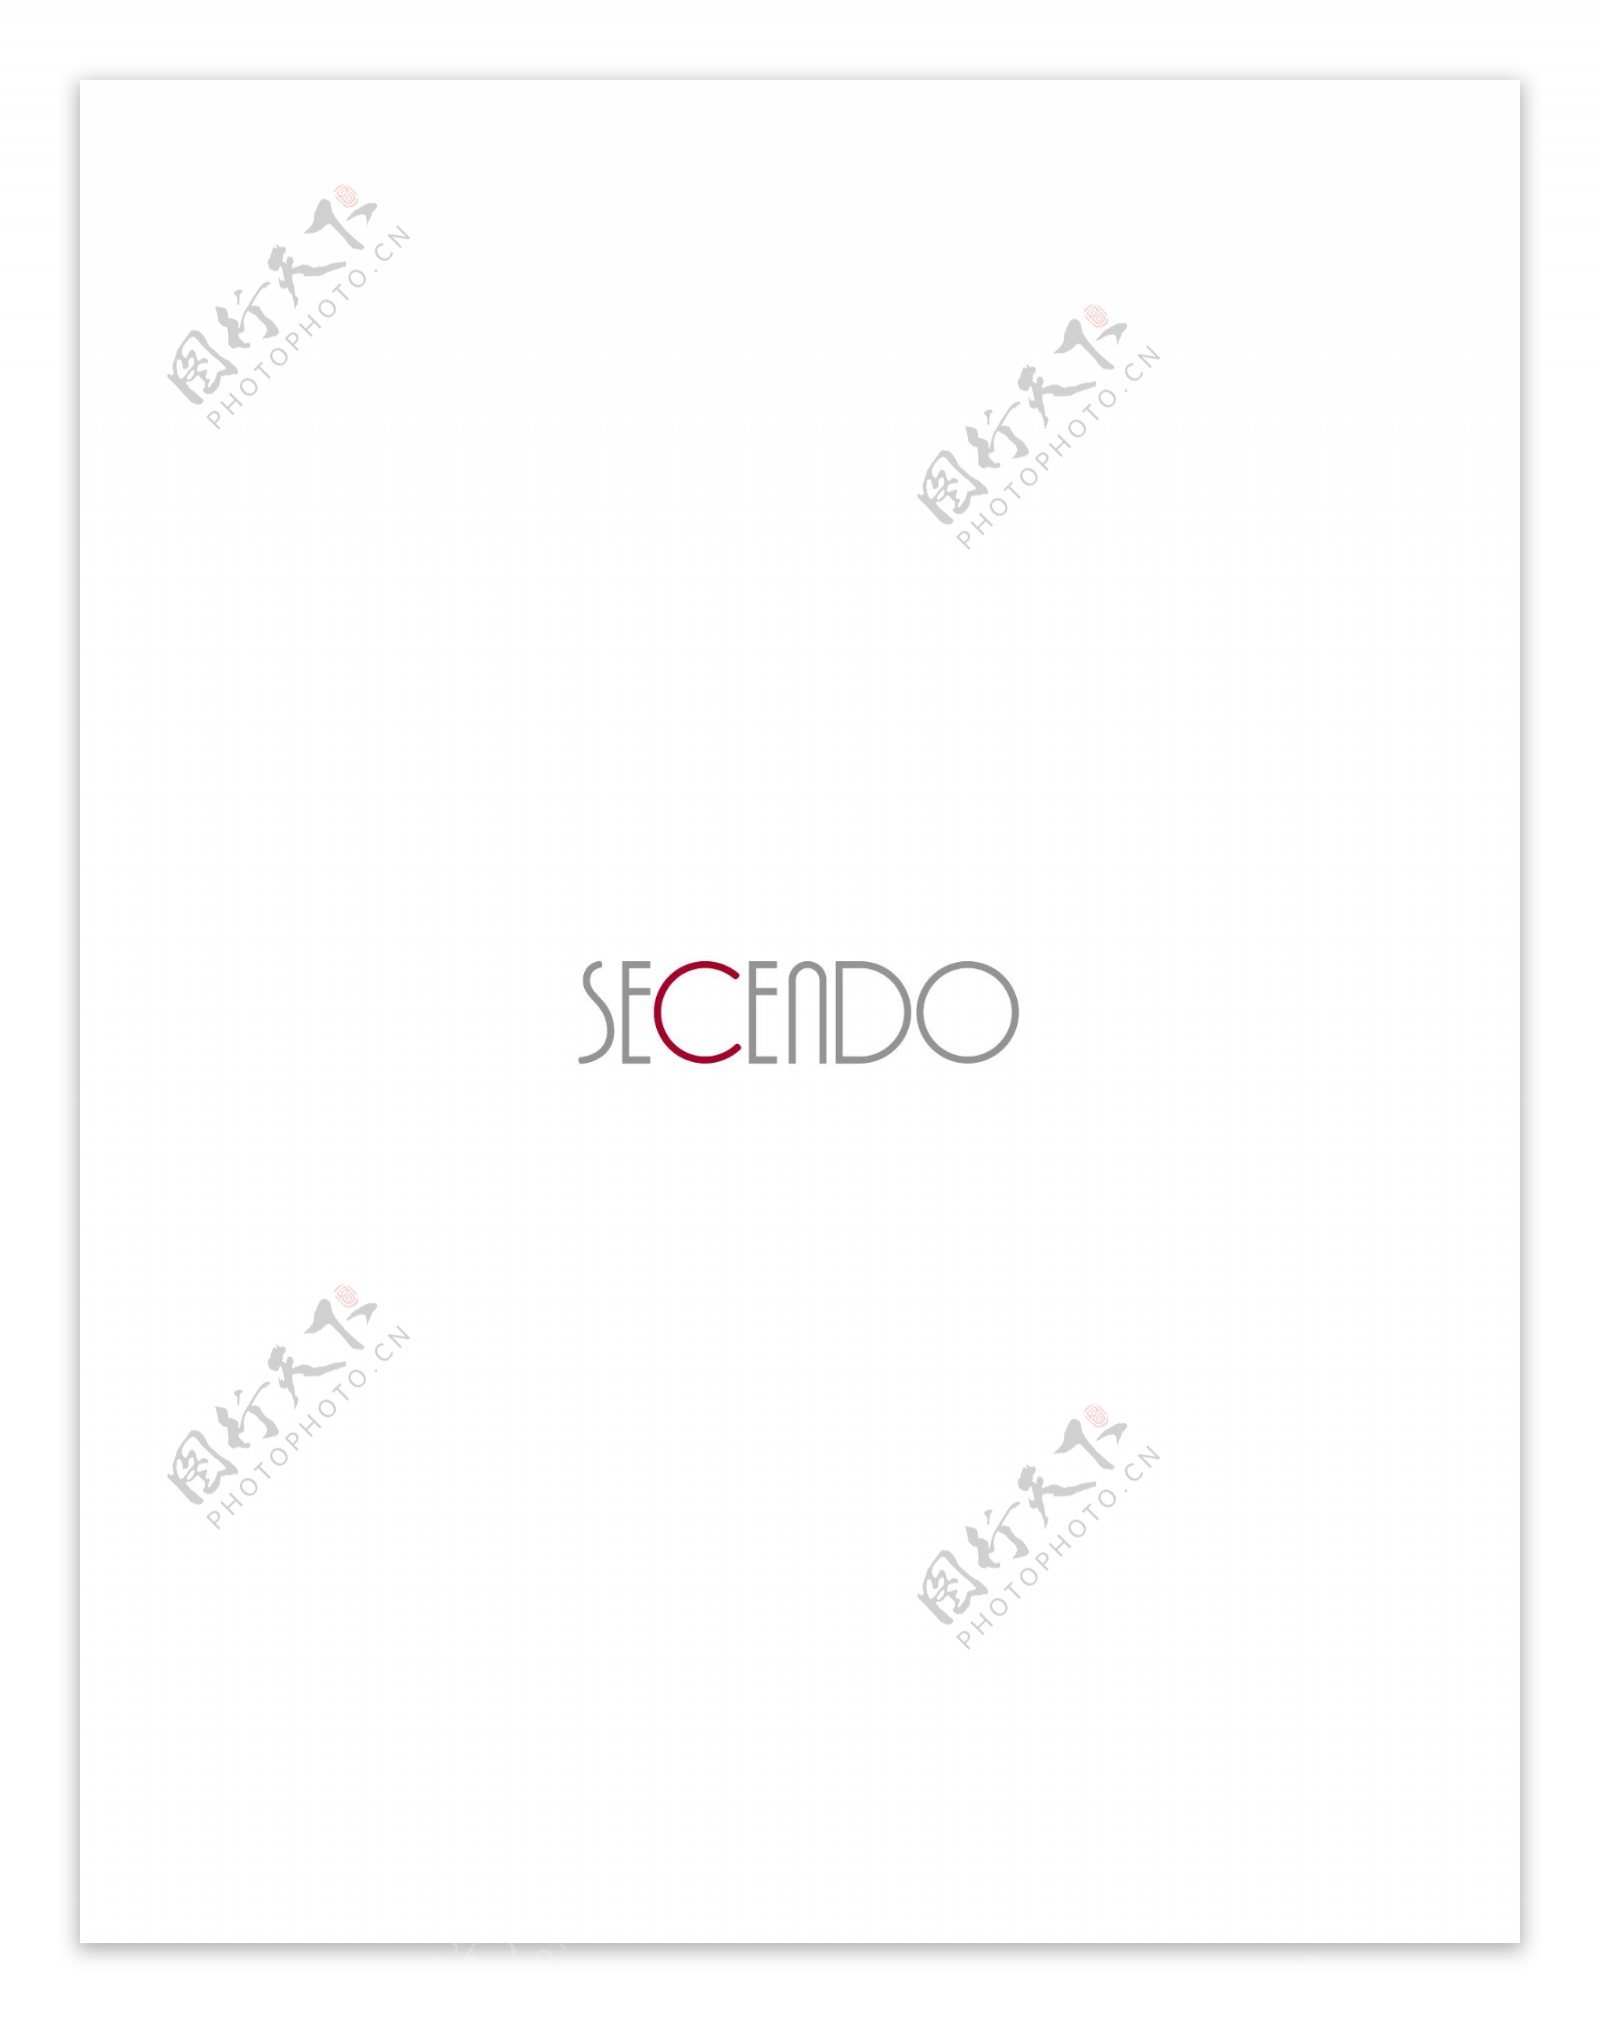 Secendologo设计欣赏足球队队徽LOGO设计Secendo下载标志设计欣赏